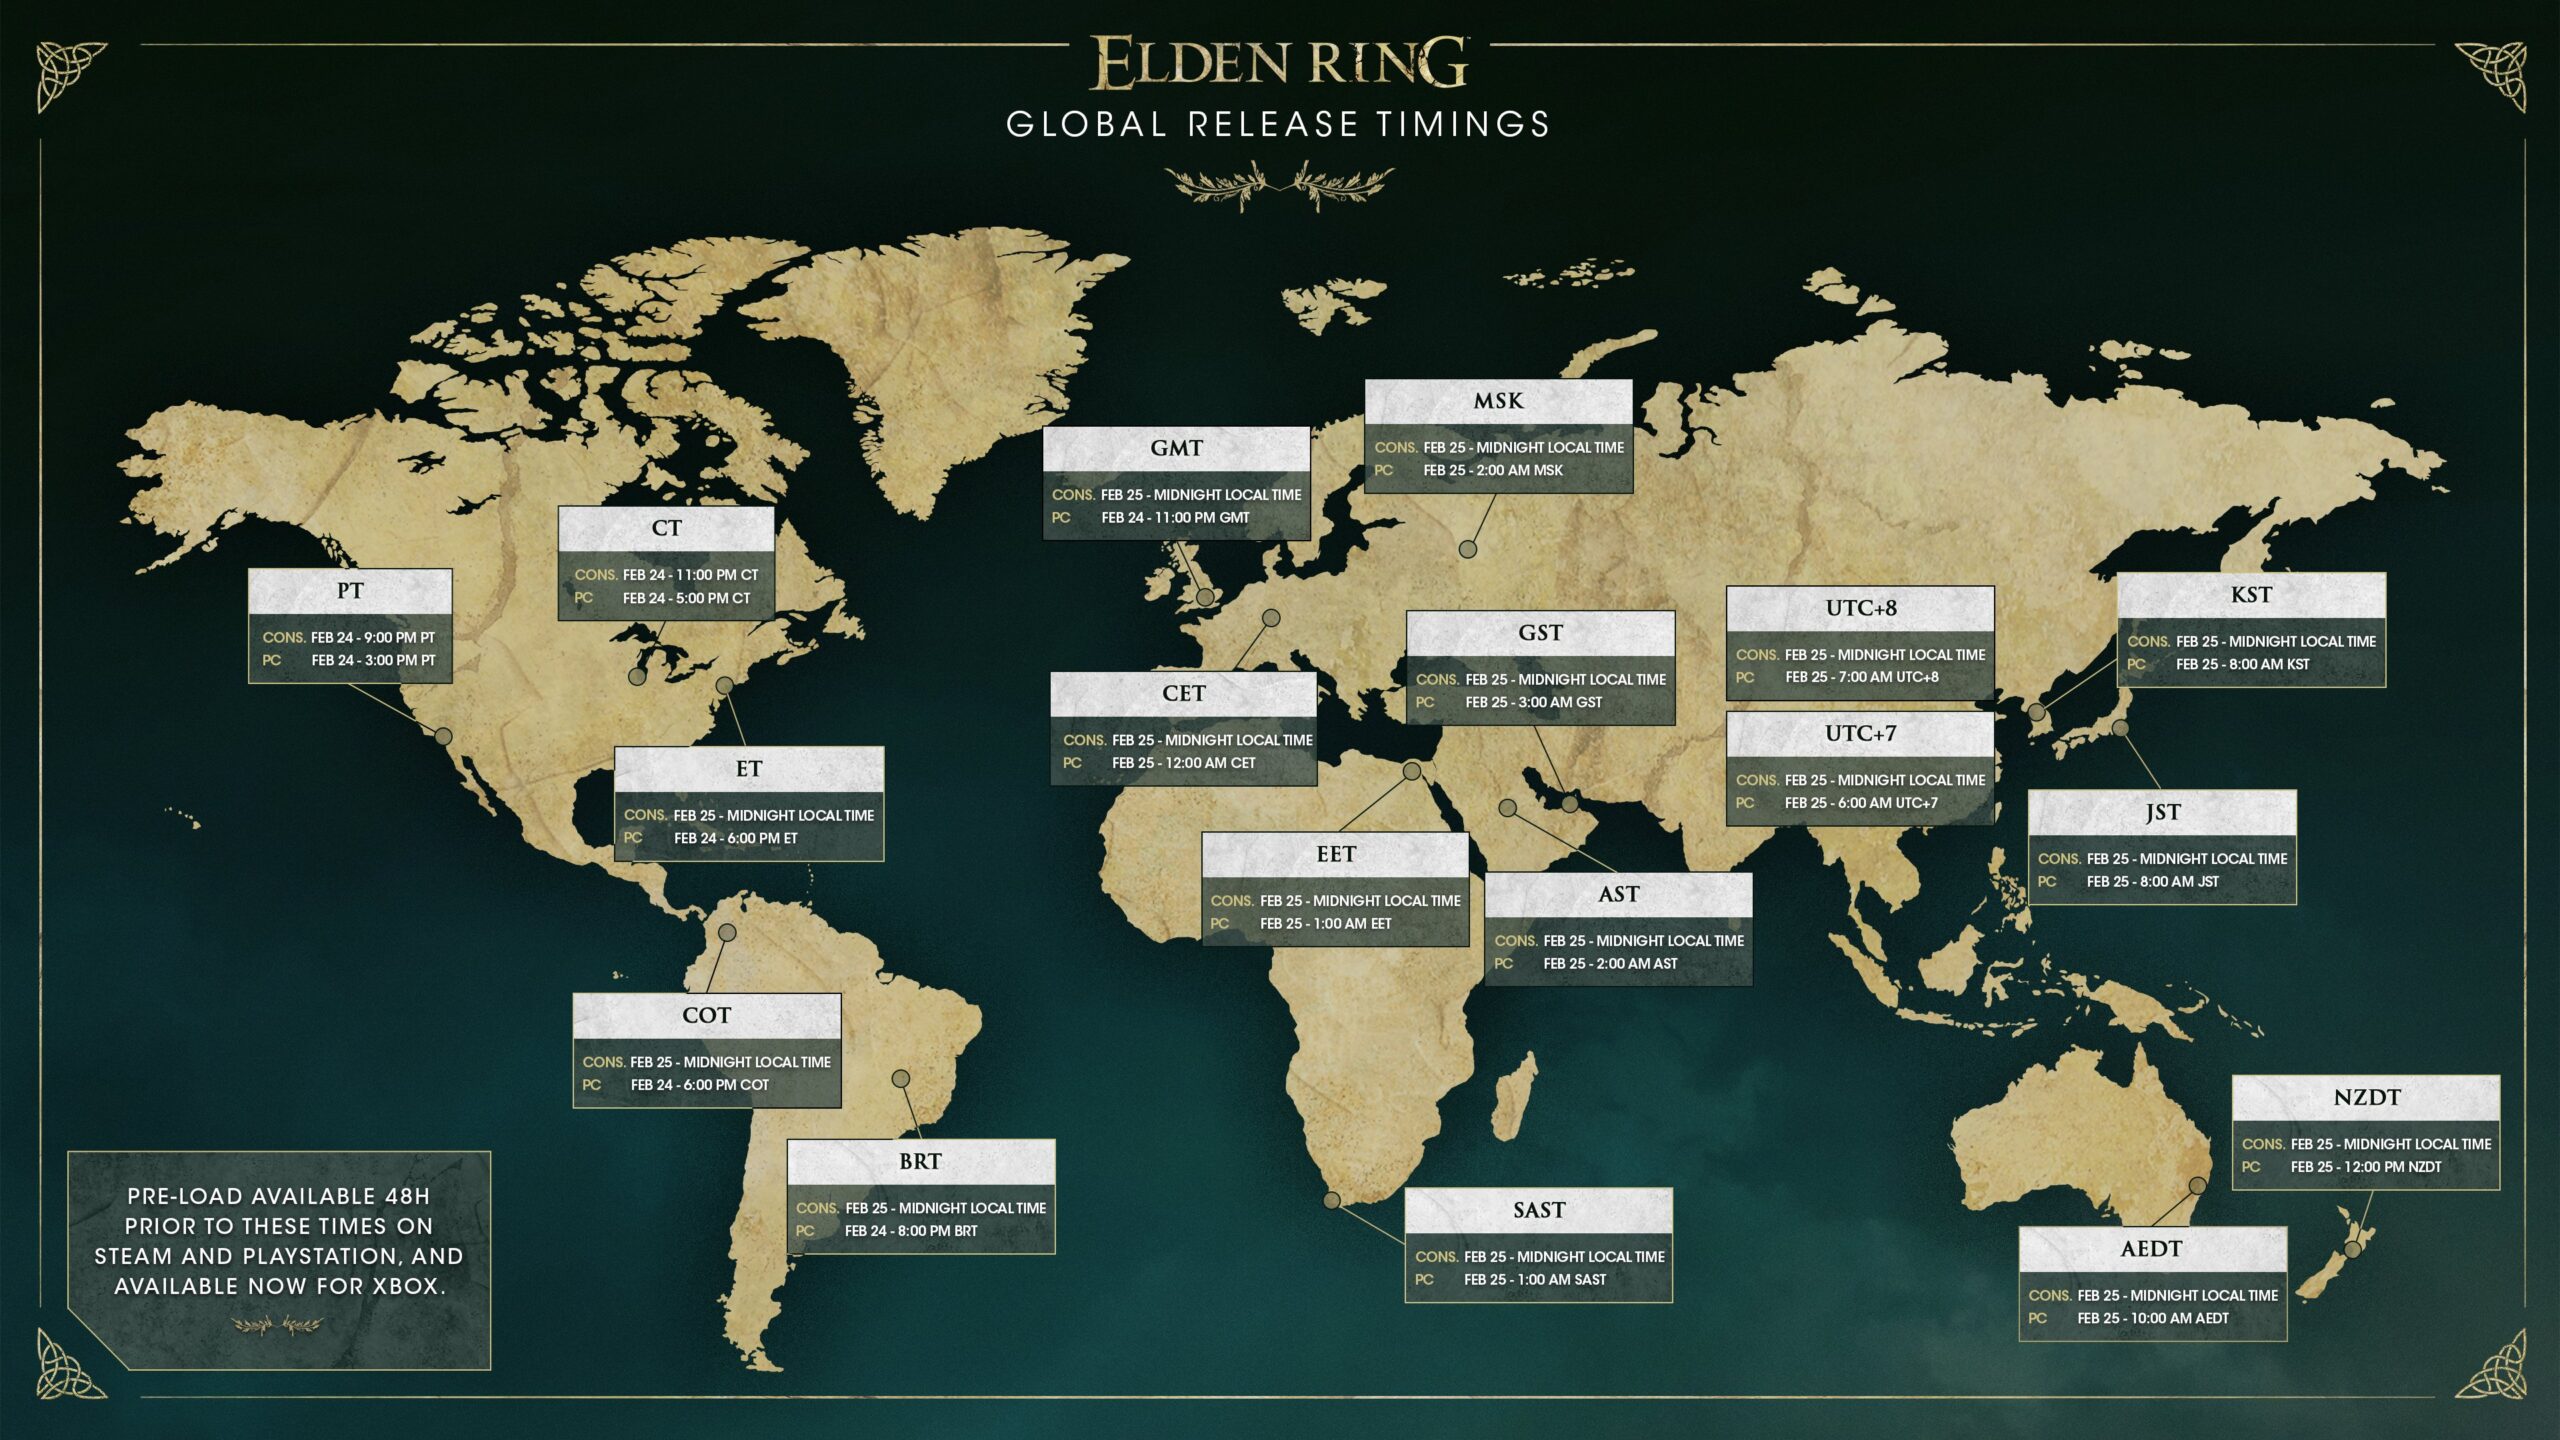 Elden-RIng-global-release-times-scaled.jpg